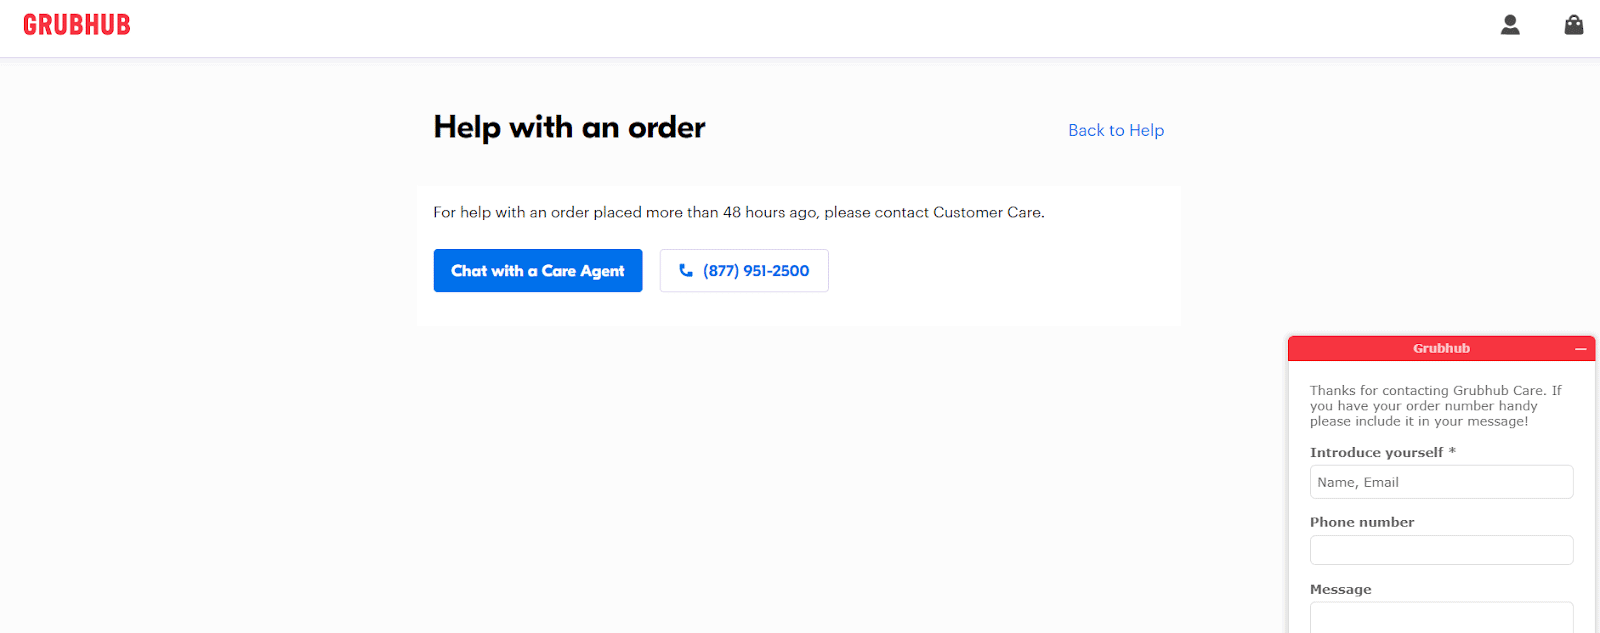 Grubhub customer service: the "Help with an order" webpage